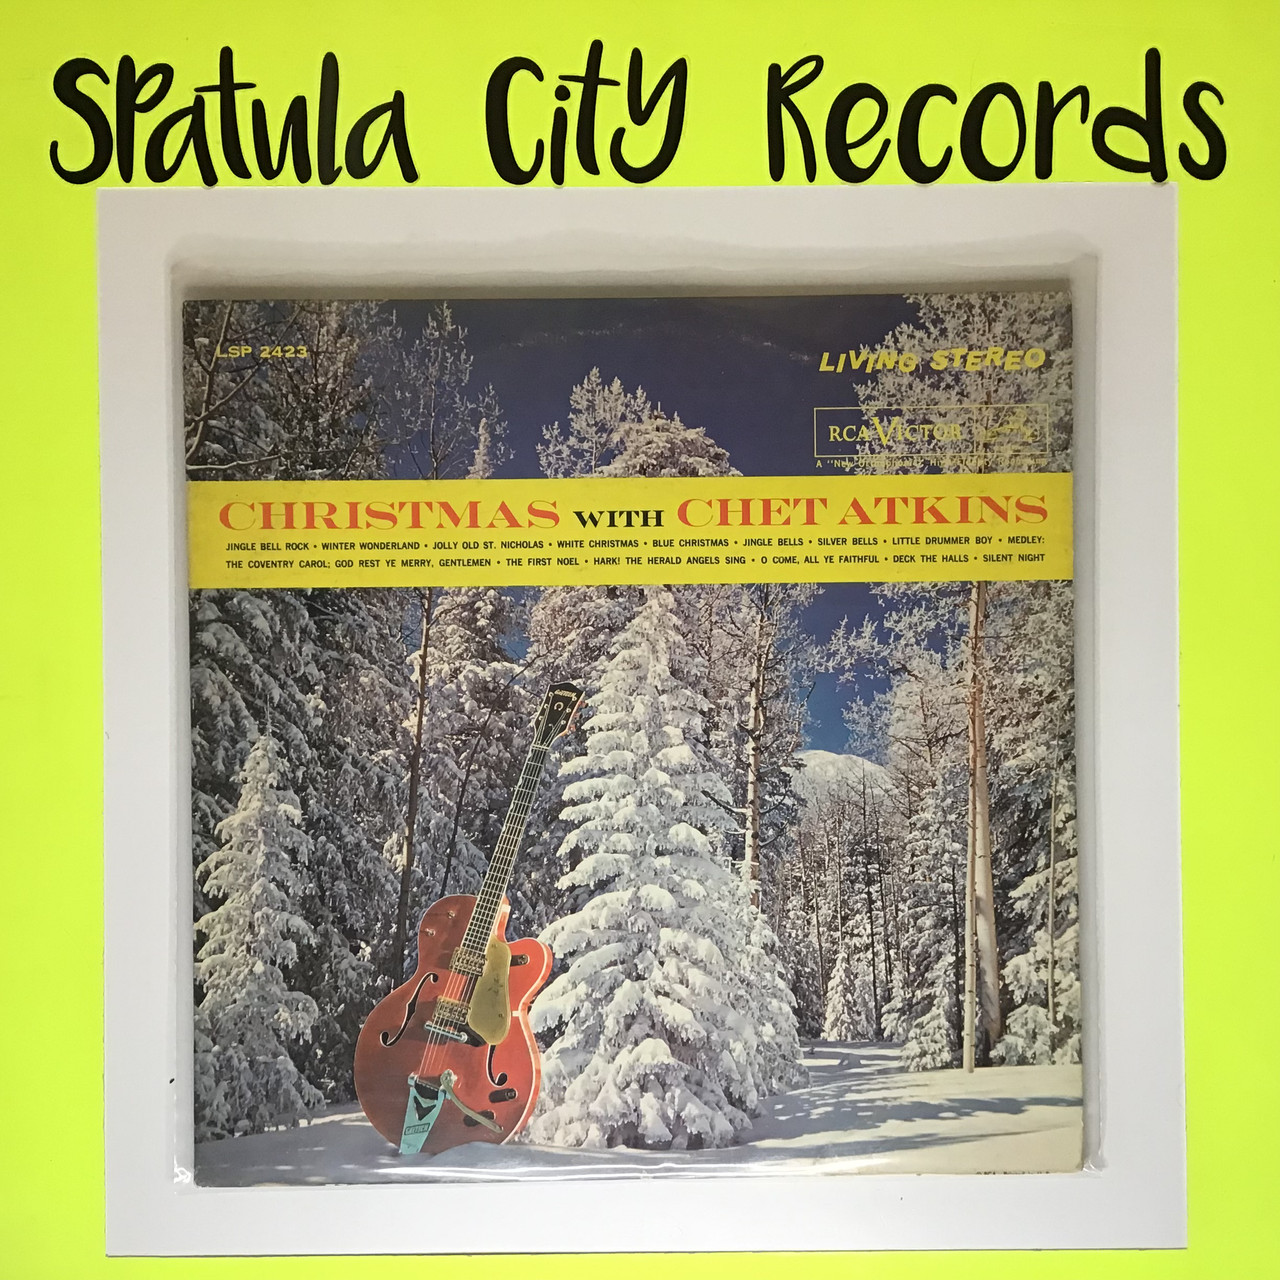 Chet Atkins - Christmas with Chet Atkins - vinyl record album LP